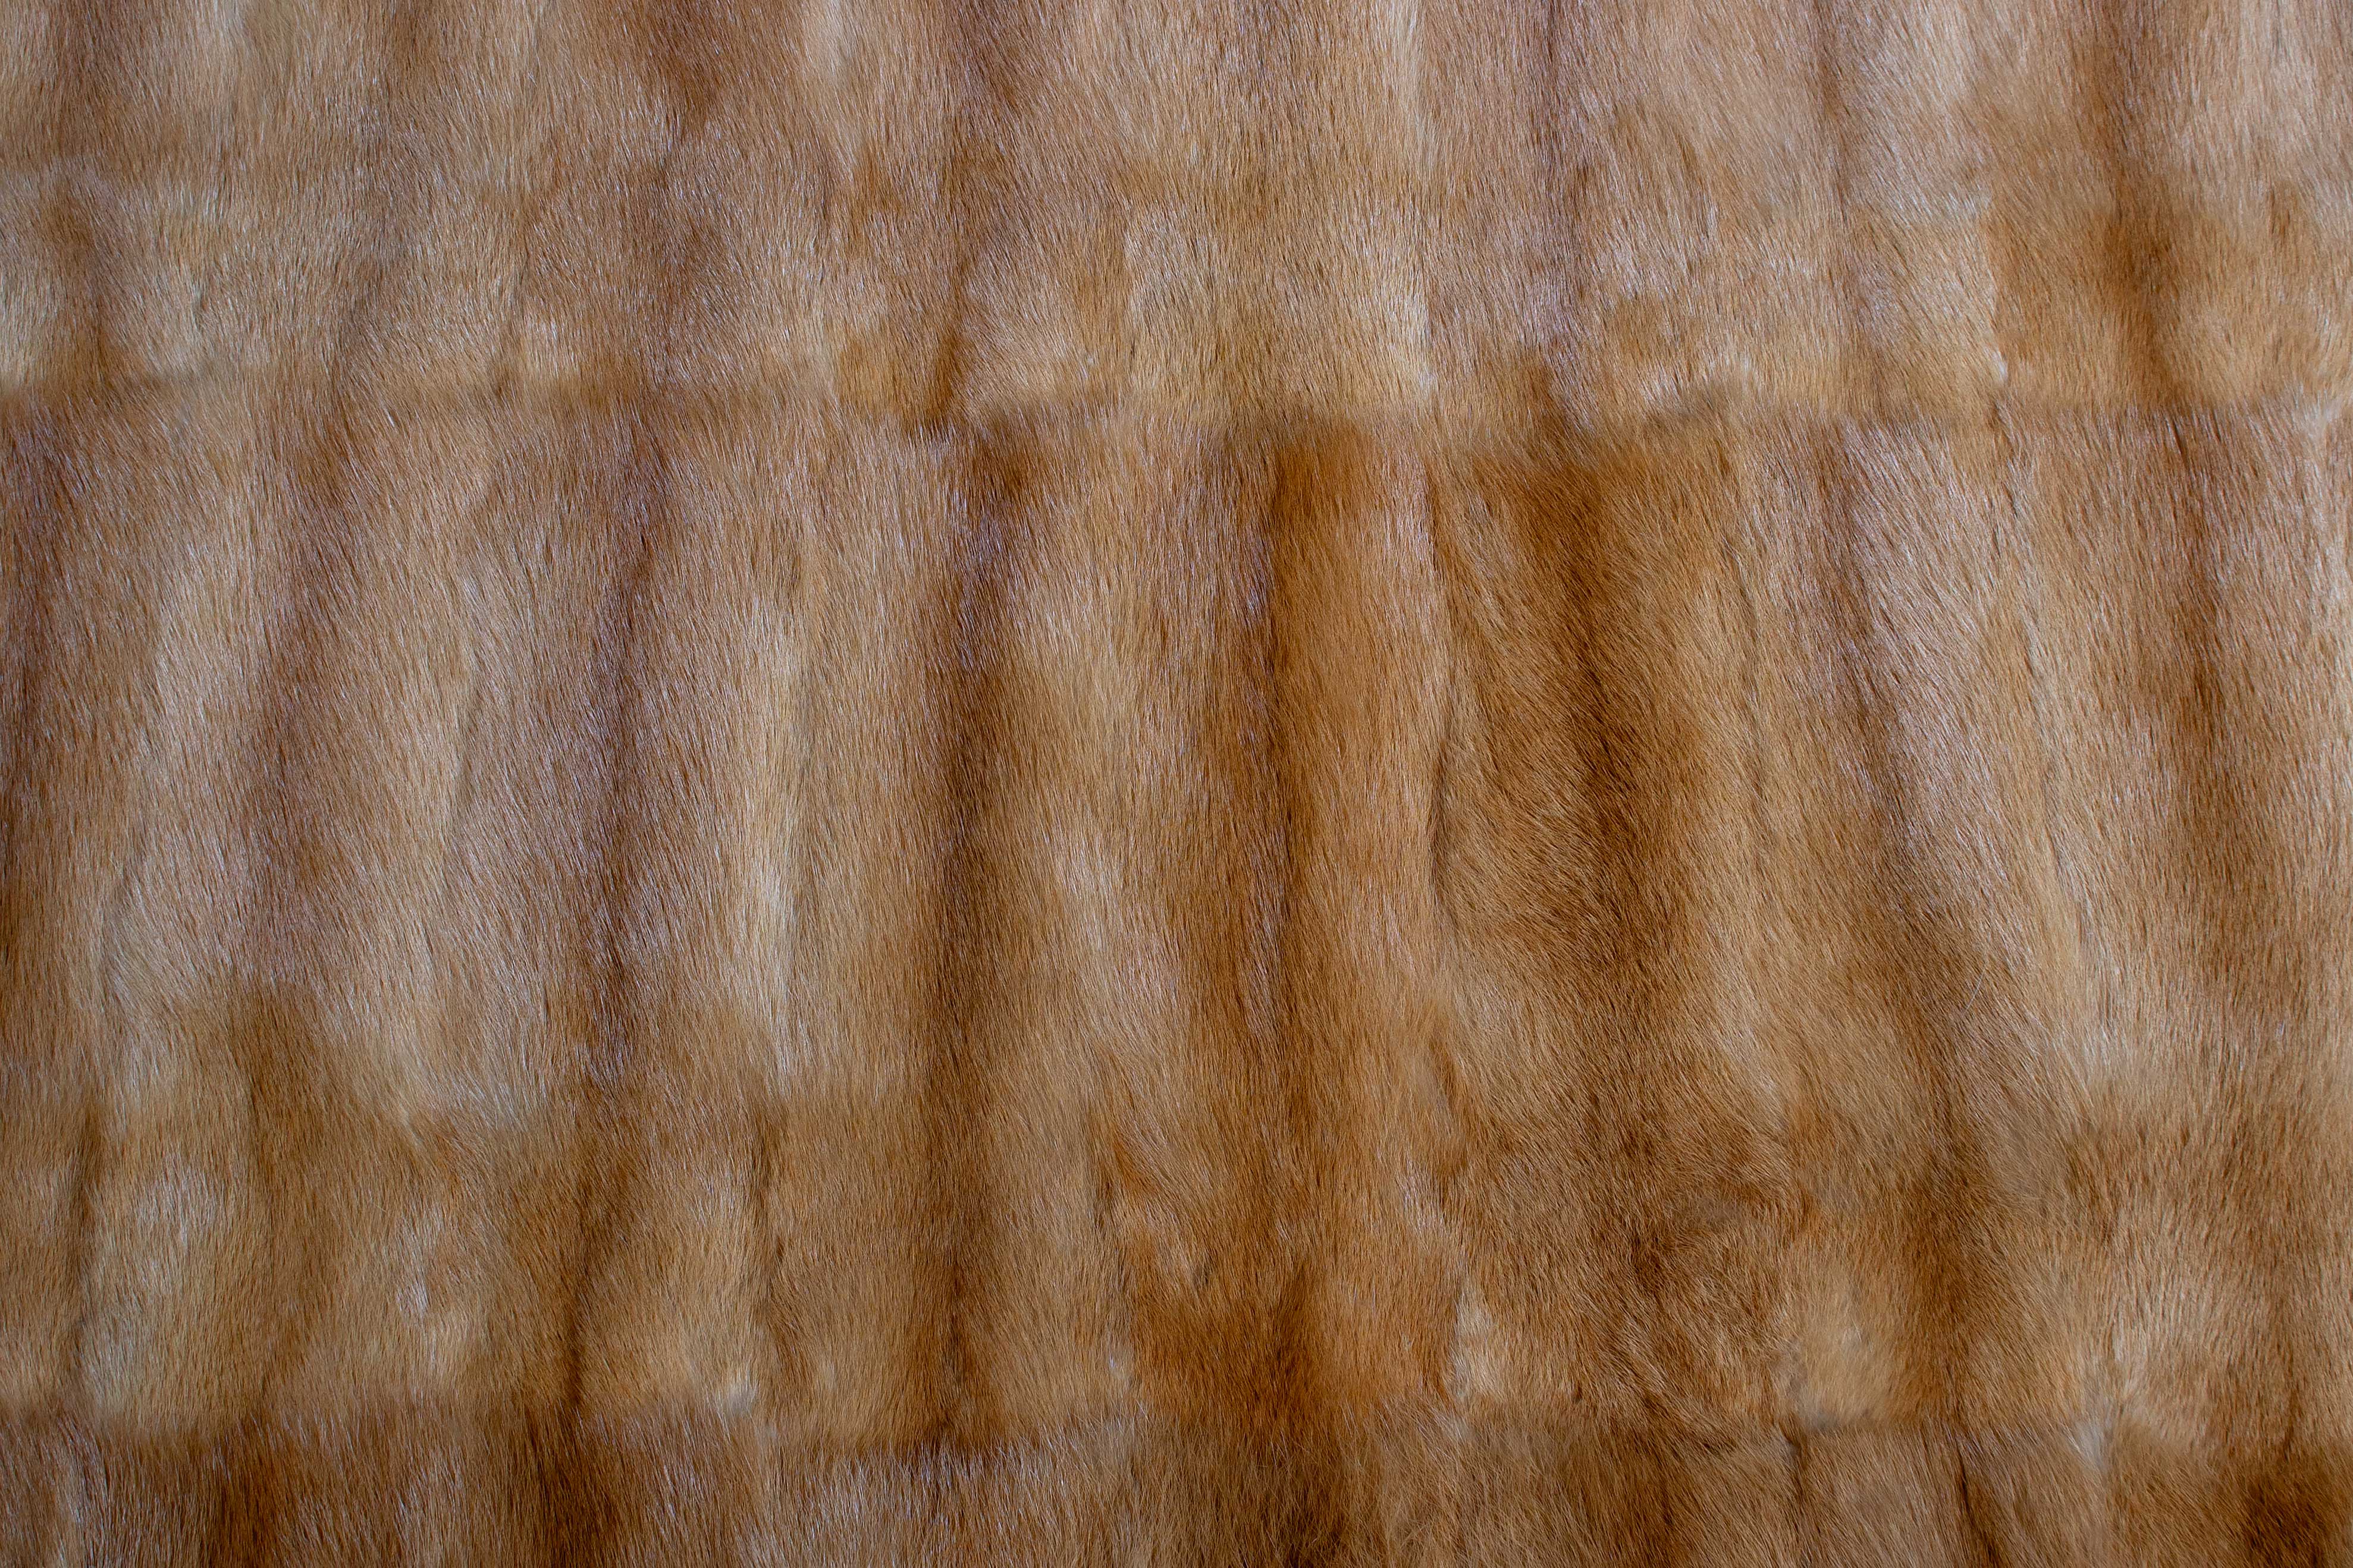 Weasel Fur Rug - Russian Kolinsky Carpet